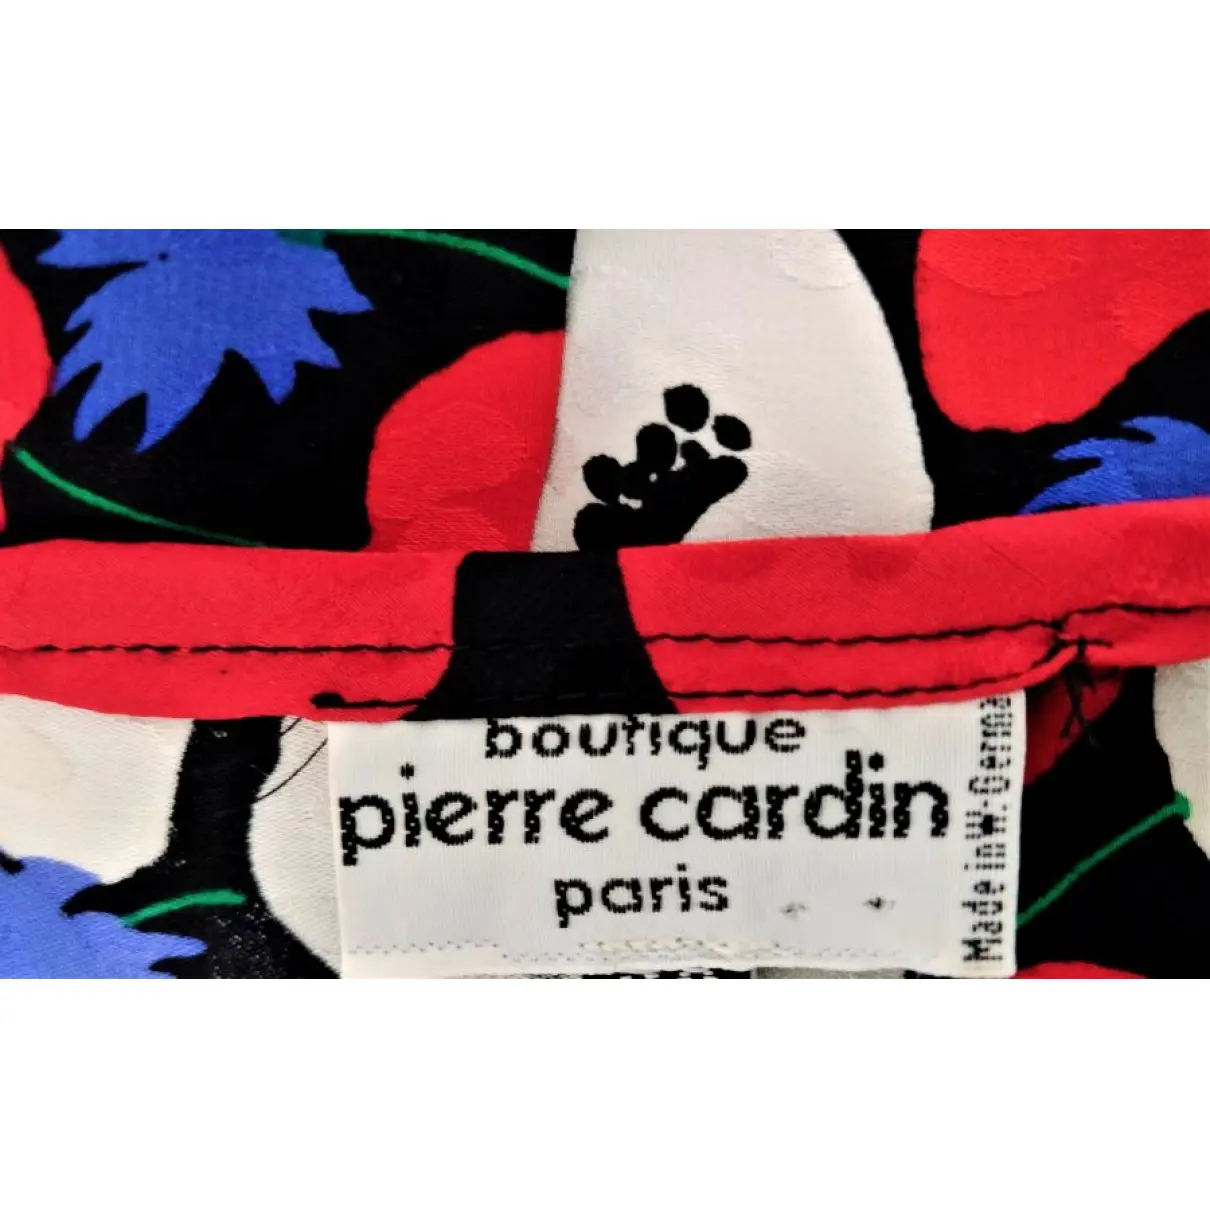 Silk mid-length dress Pierre Cardin - Vintage